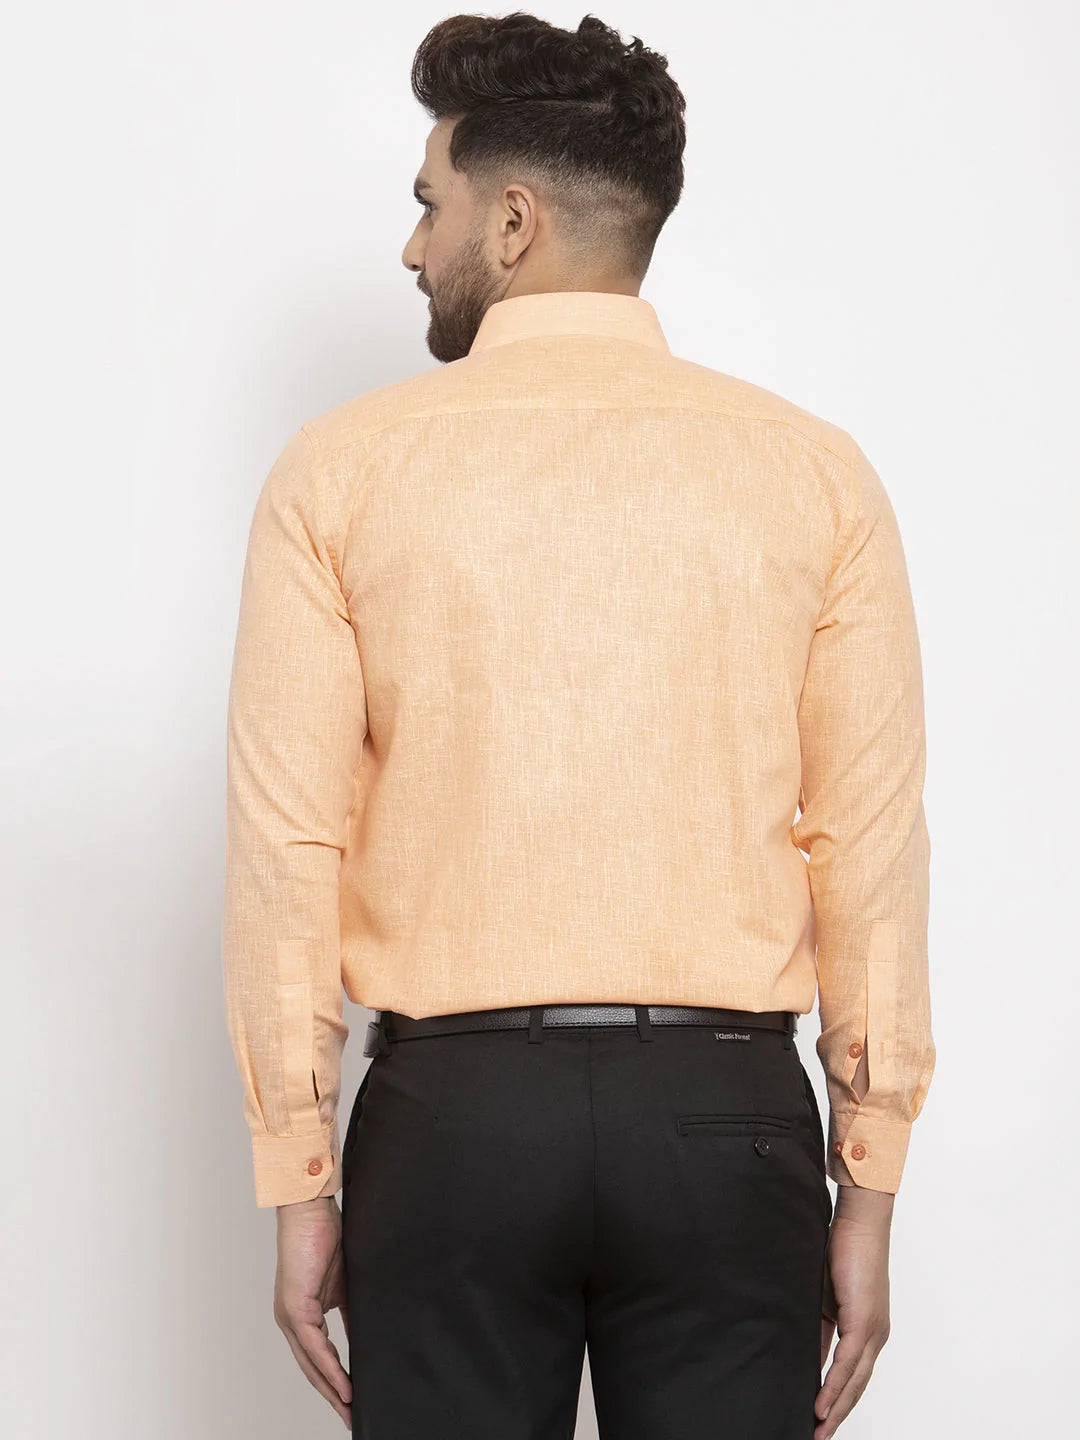 Jainish Orange Men's Dobby Solid Formal Shirts ( SF 762Light-Orange )